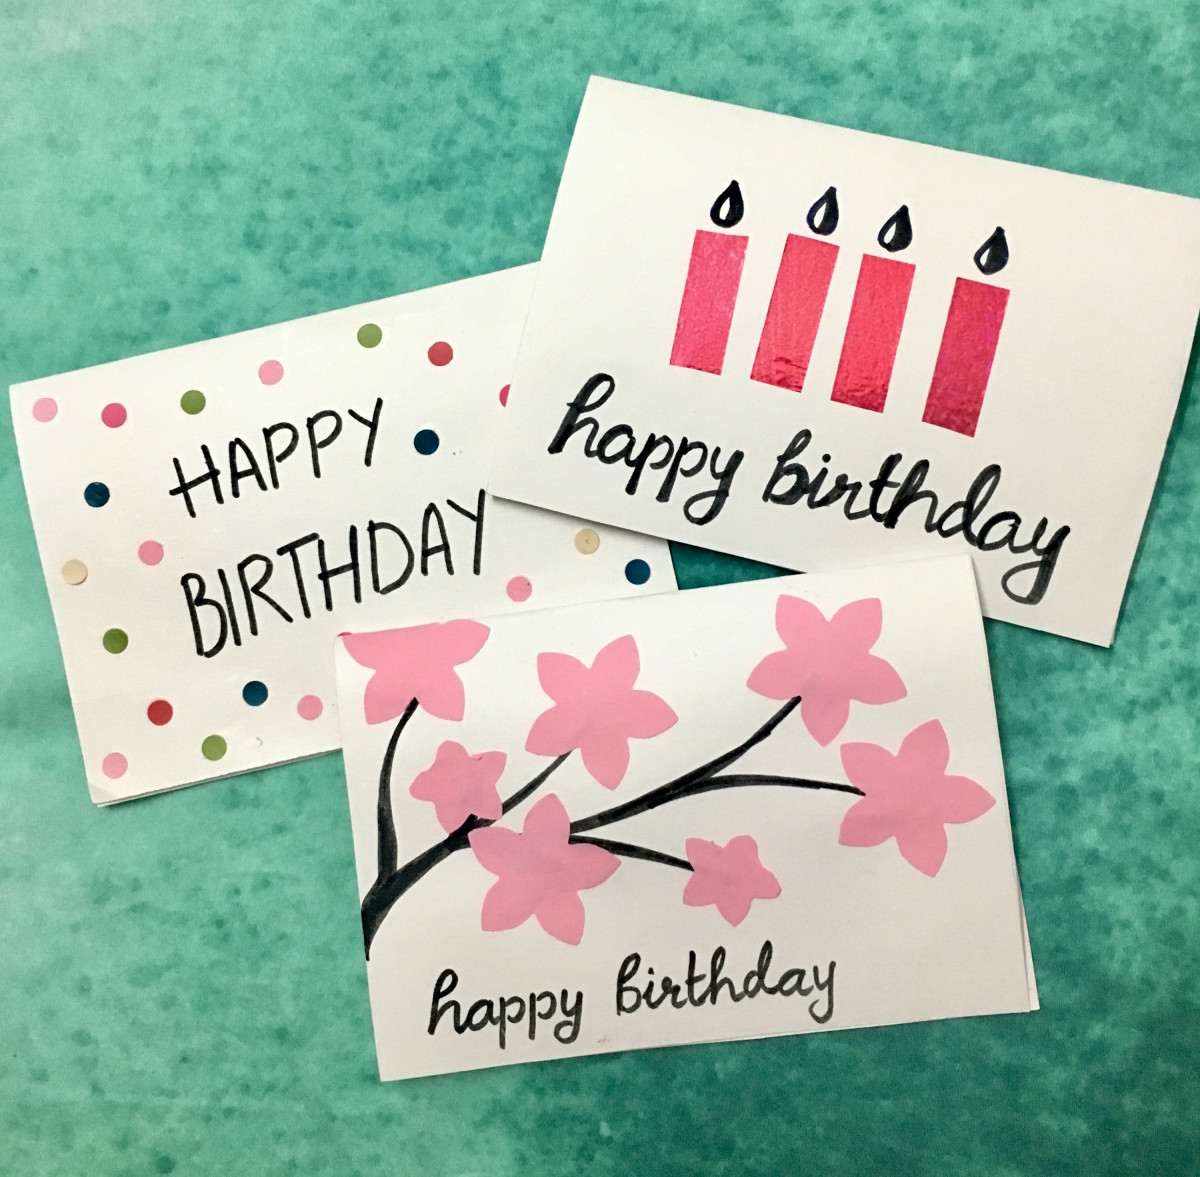 Birthday Party Card Ideas